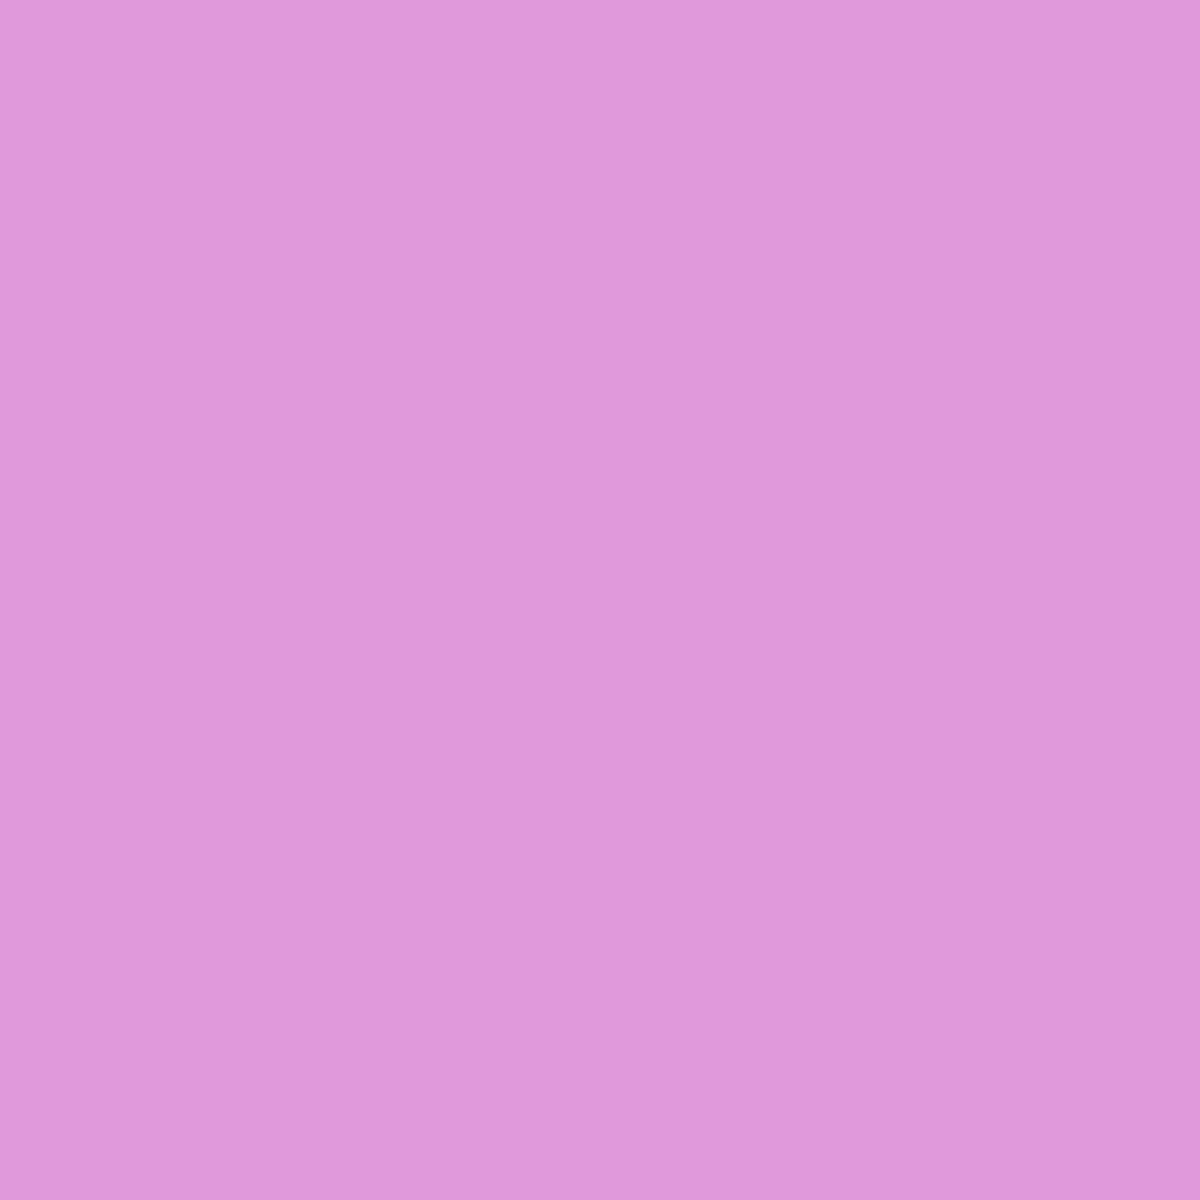 Swatch of azalea pink blush loose powder bronzer displaying its color